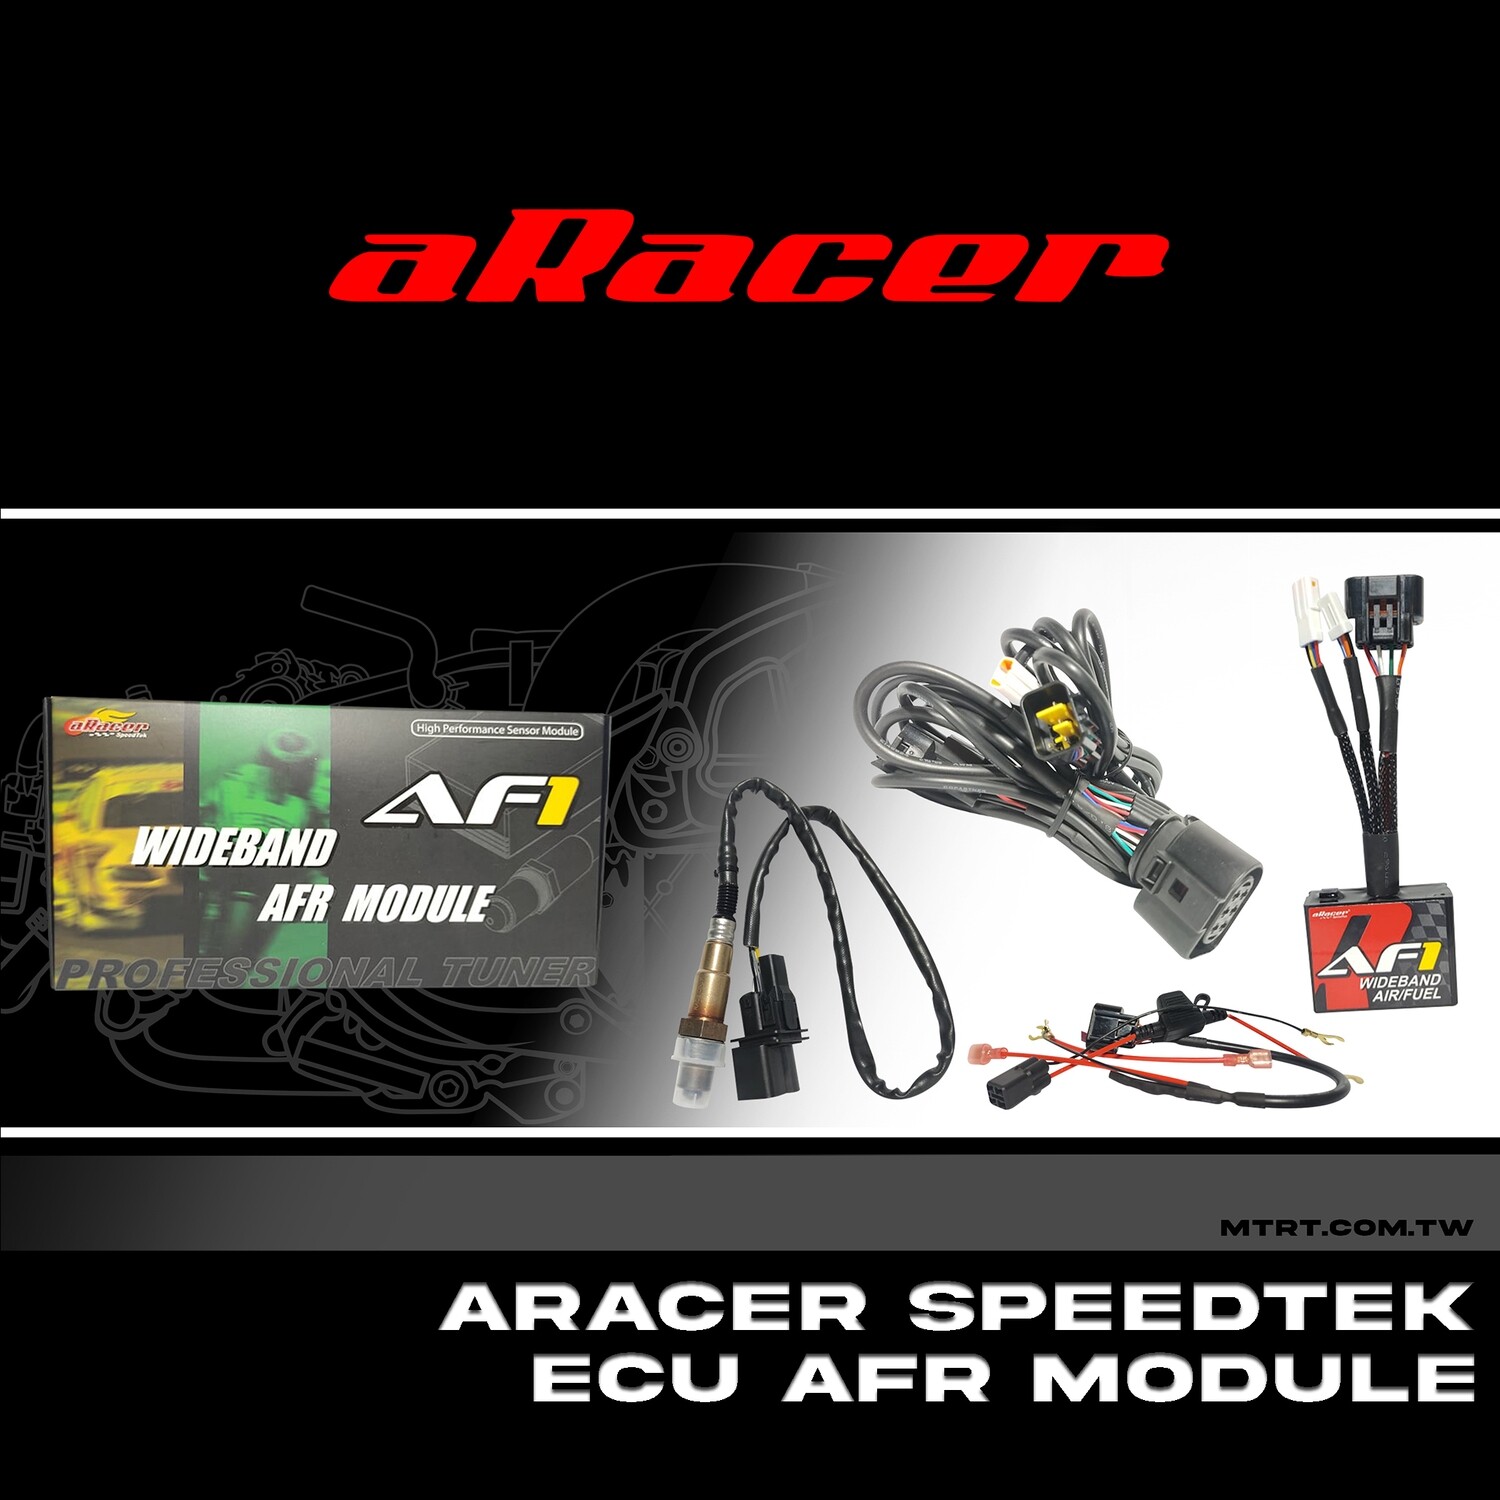 ARACER speedtek ECU AFR module